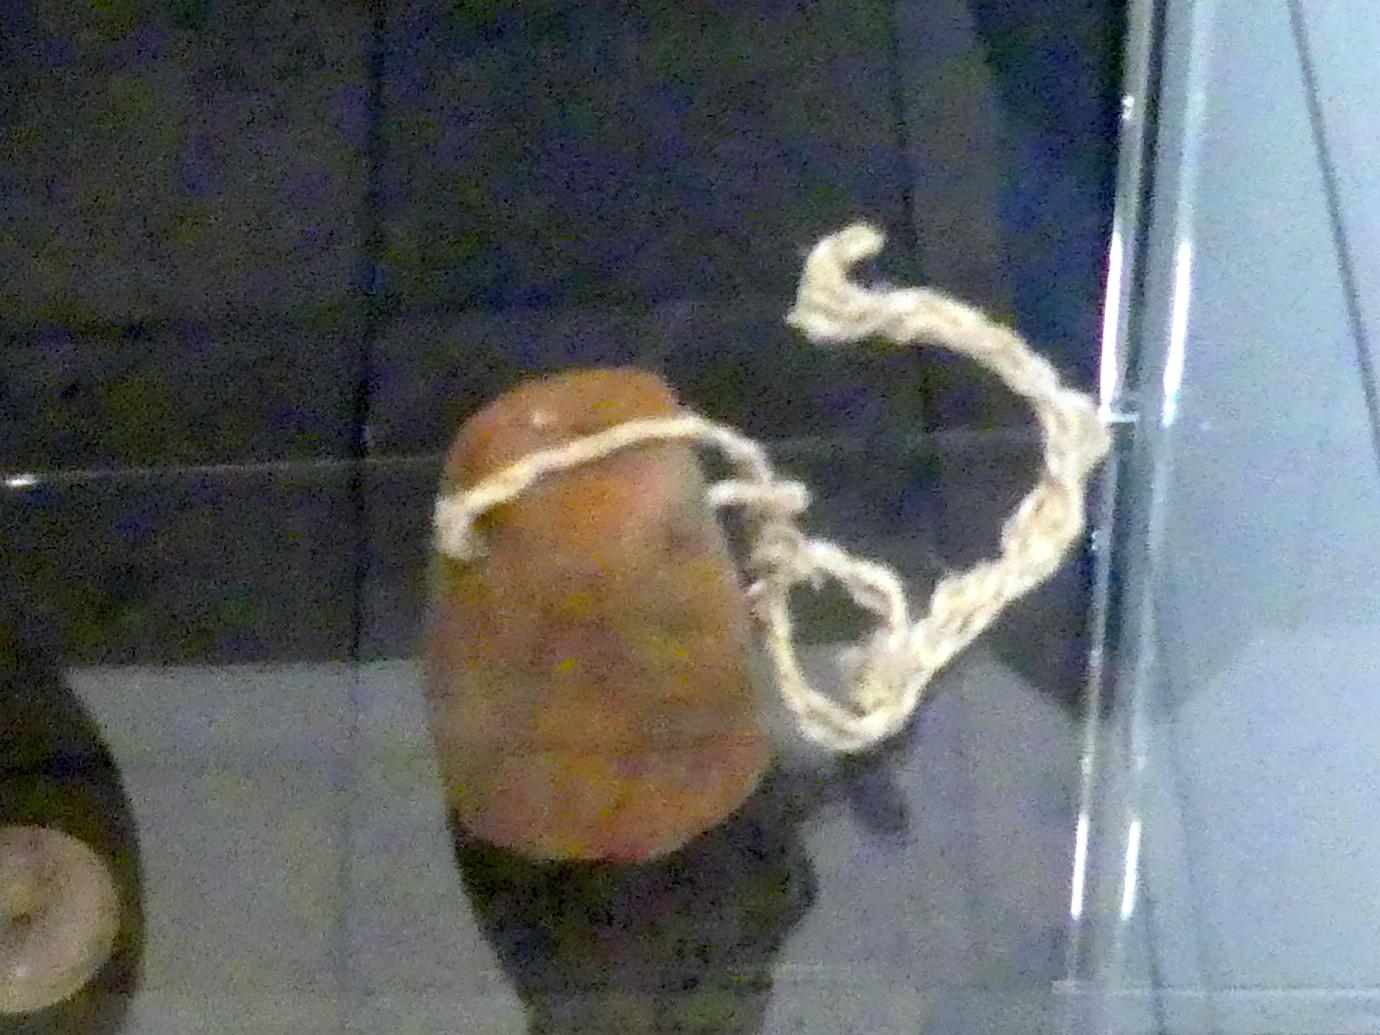 Webgewicht, Spätlatènezeit D, 700 - 100 v. Chr., Bild 1/2